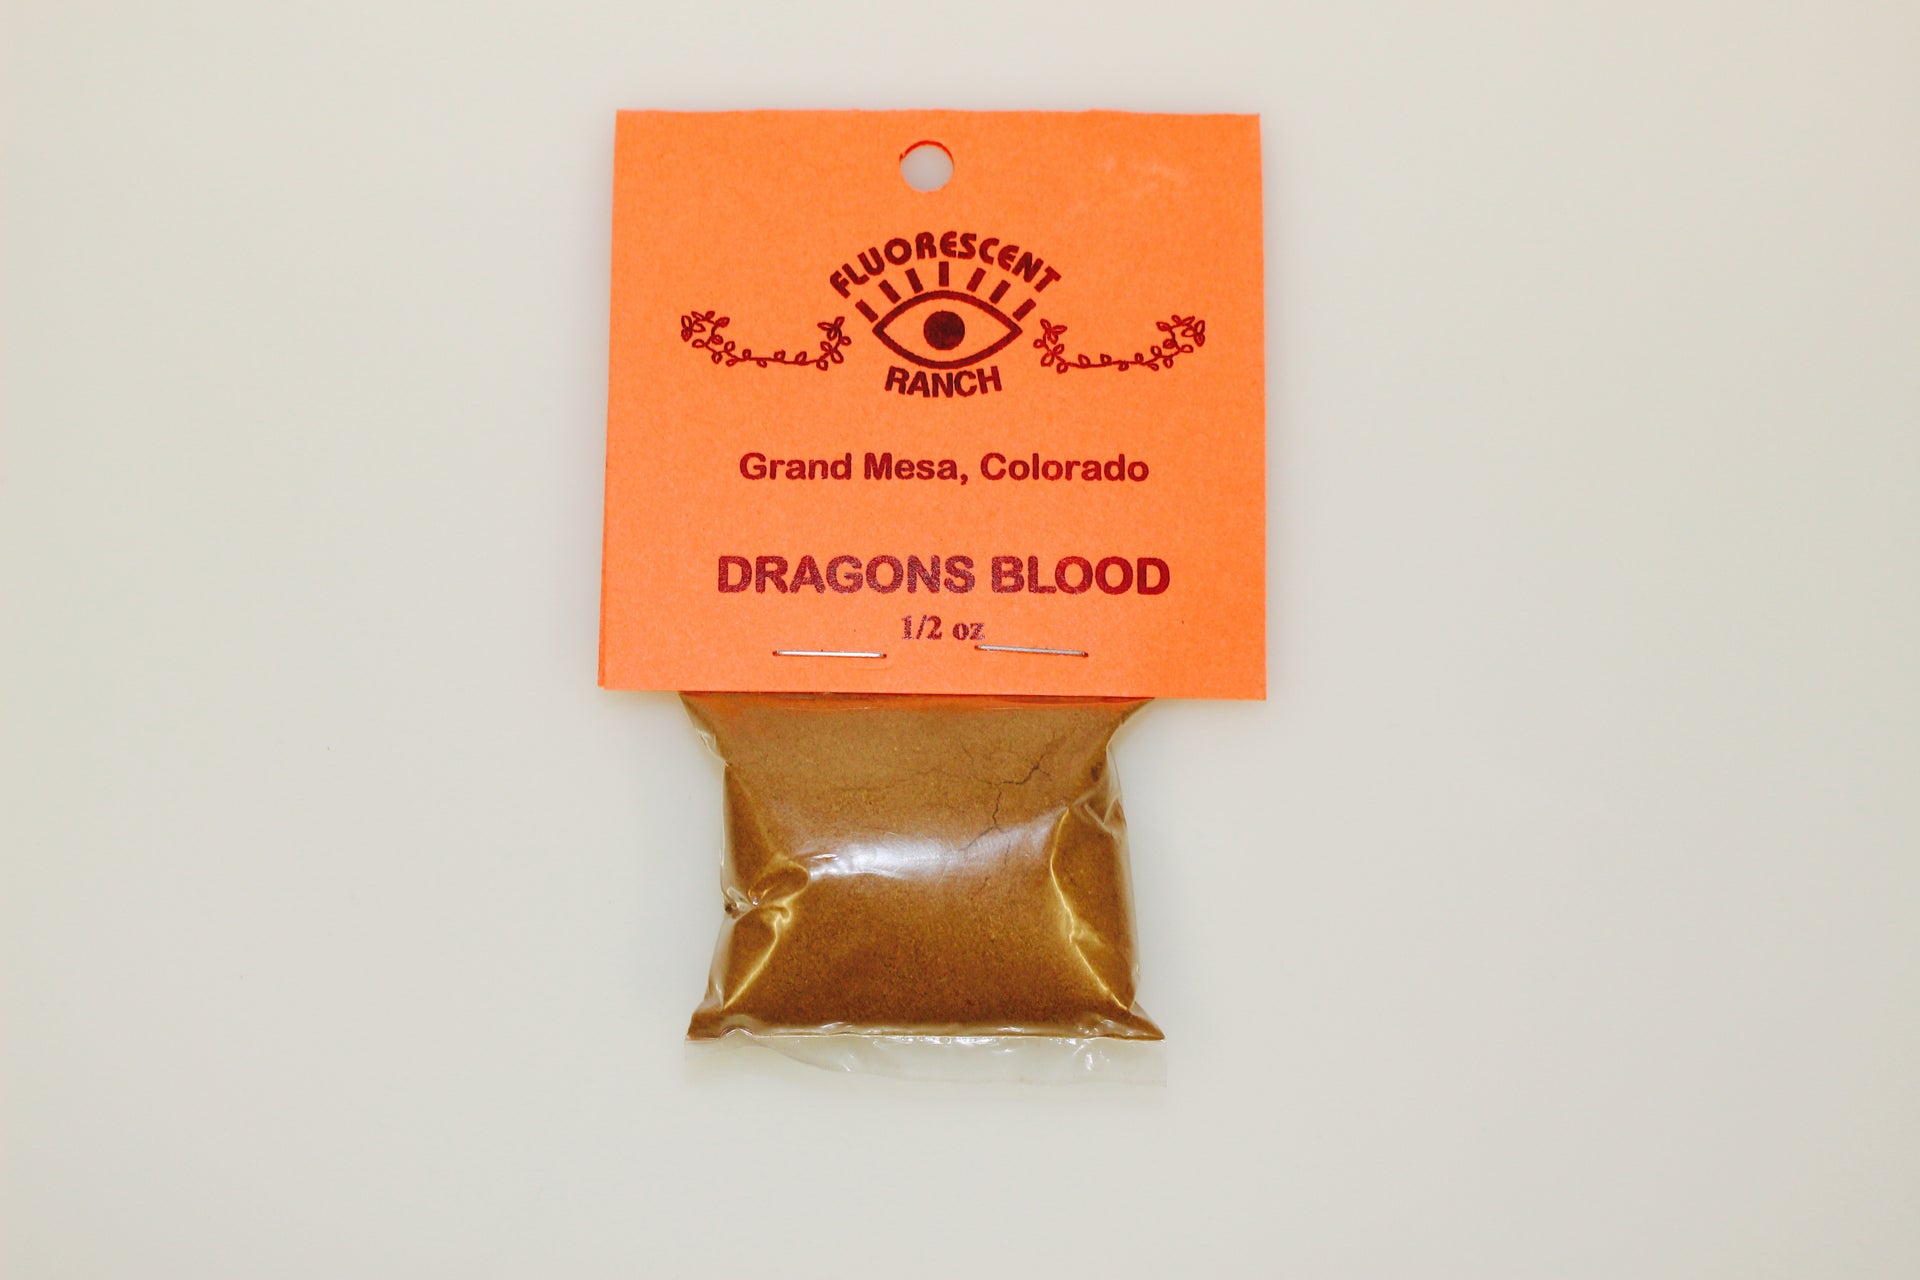 Dragons Blood powder